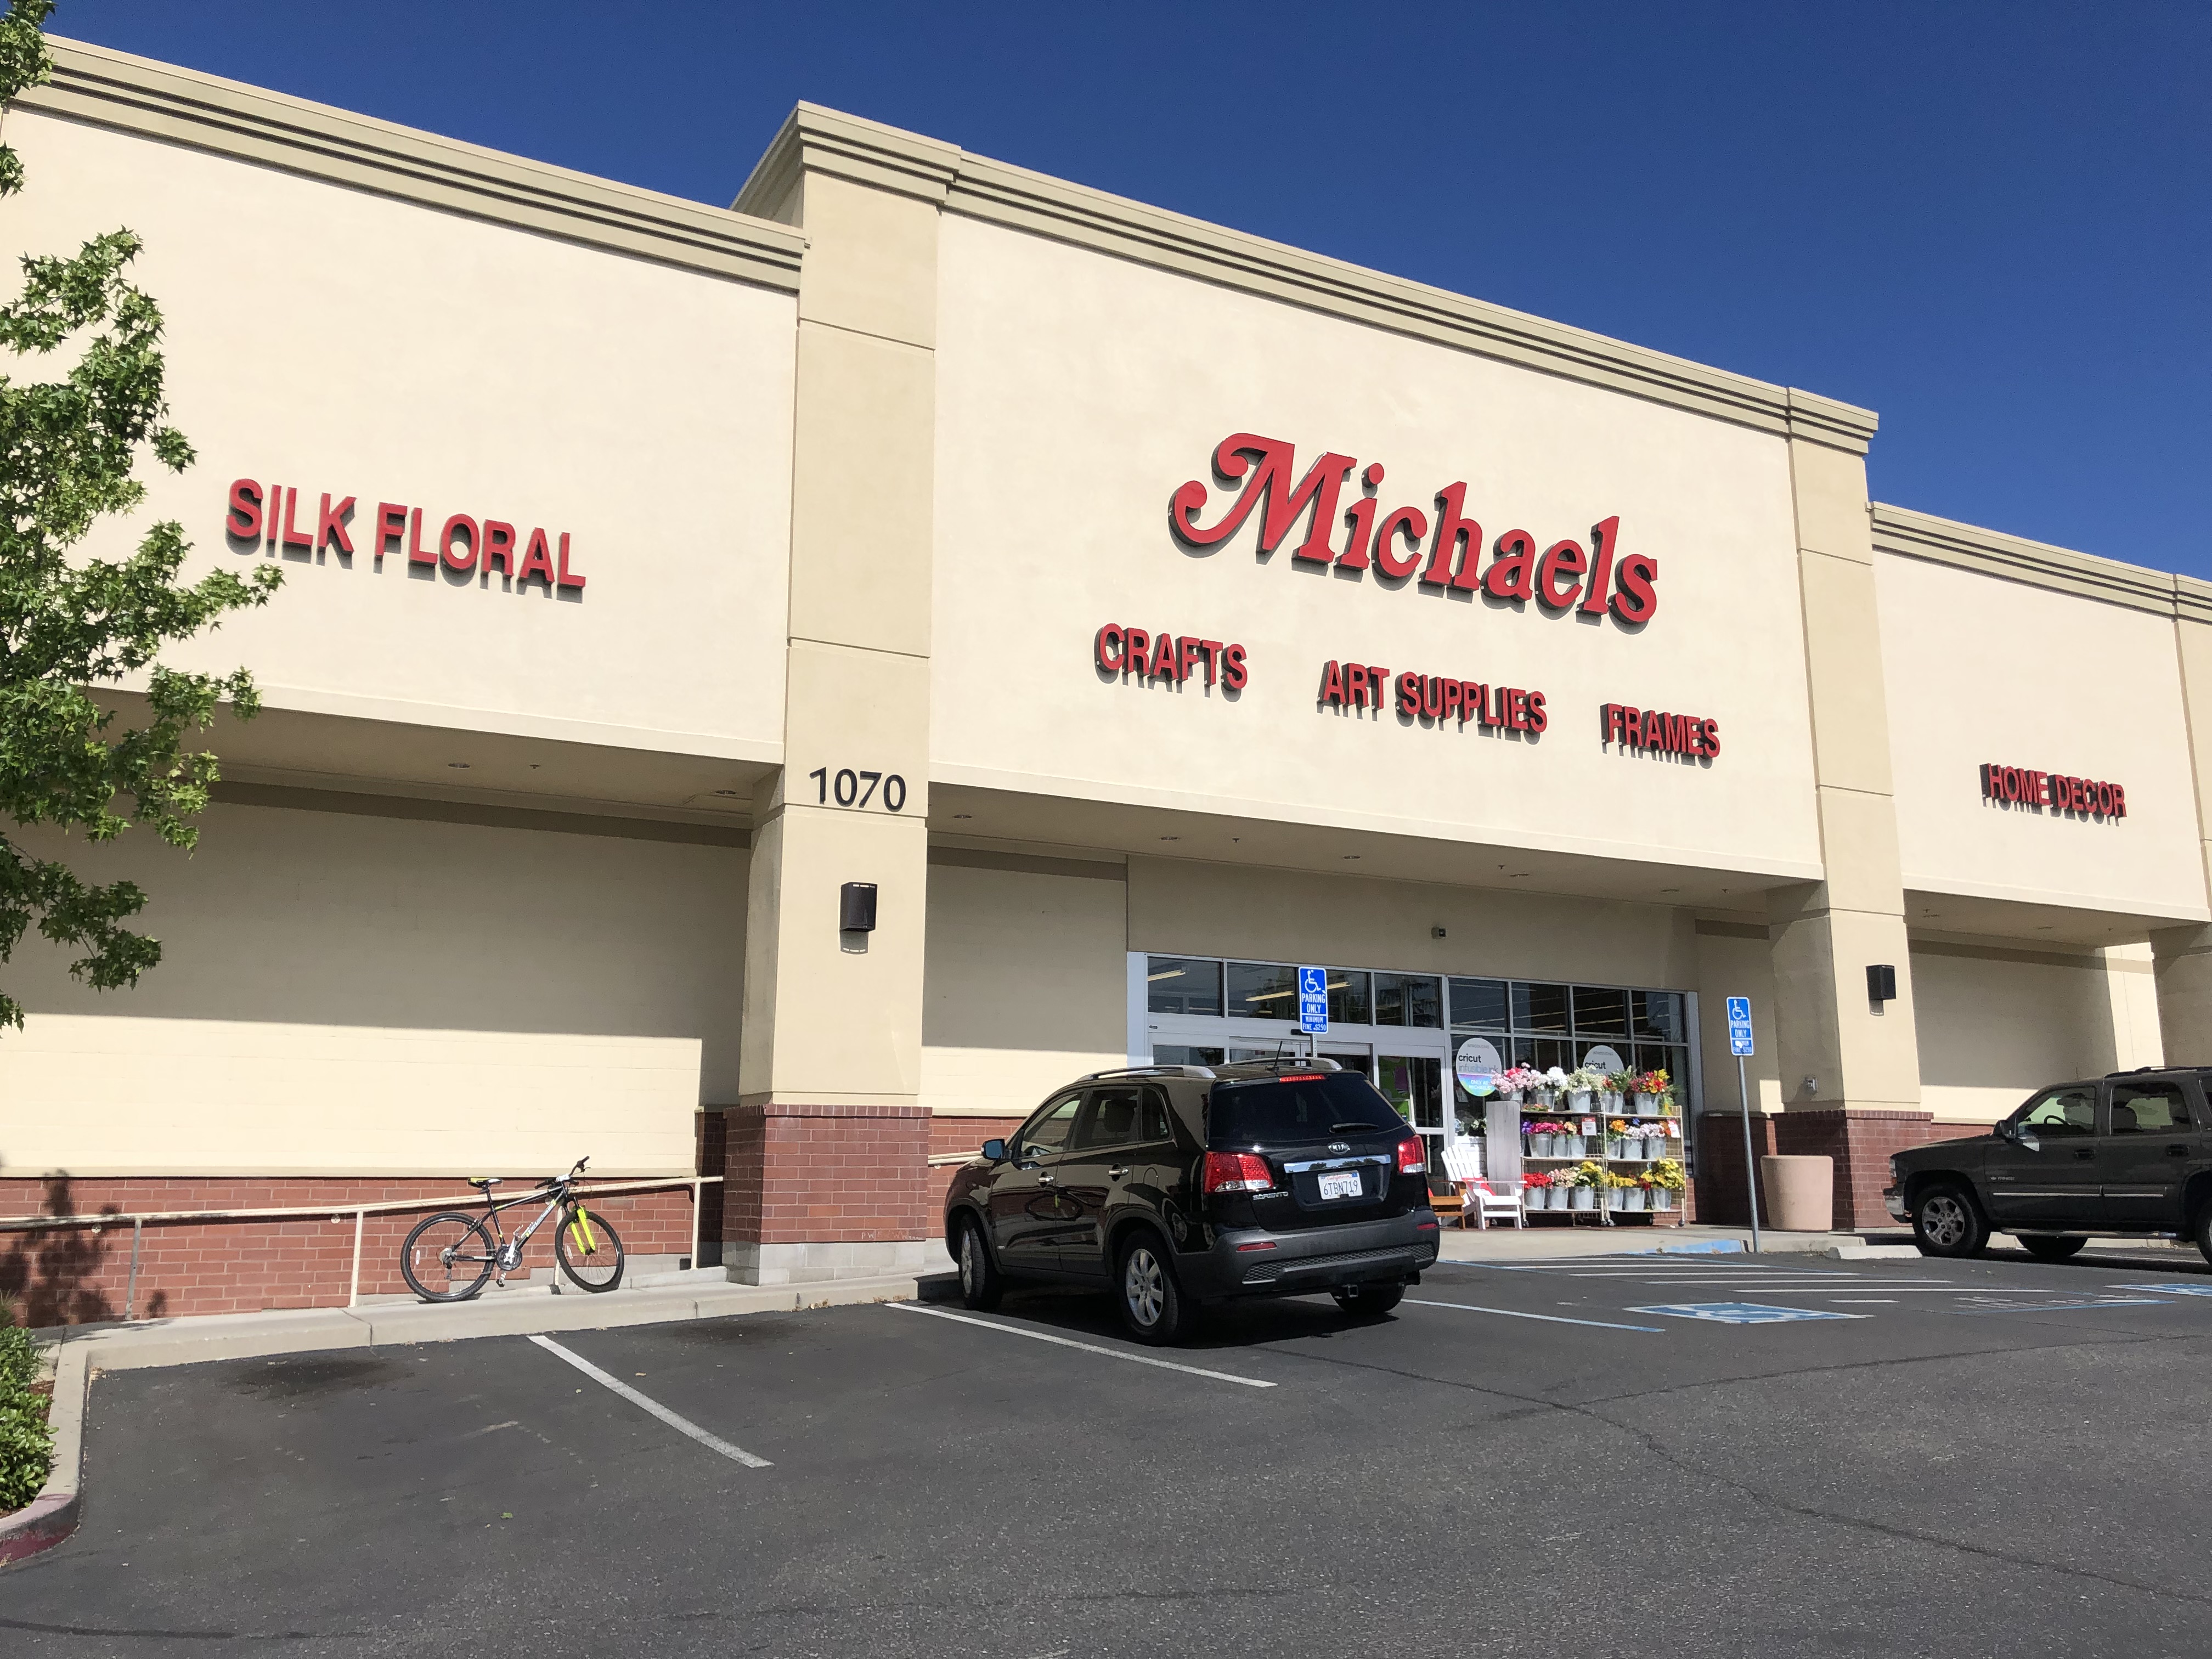 Michaels storefront